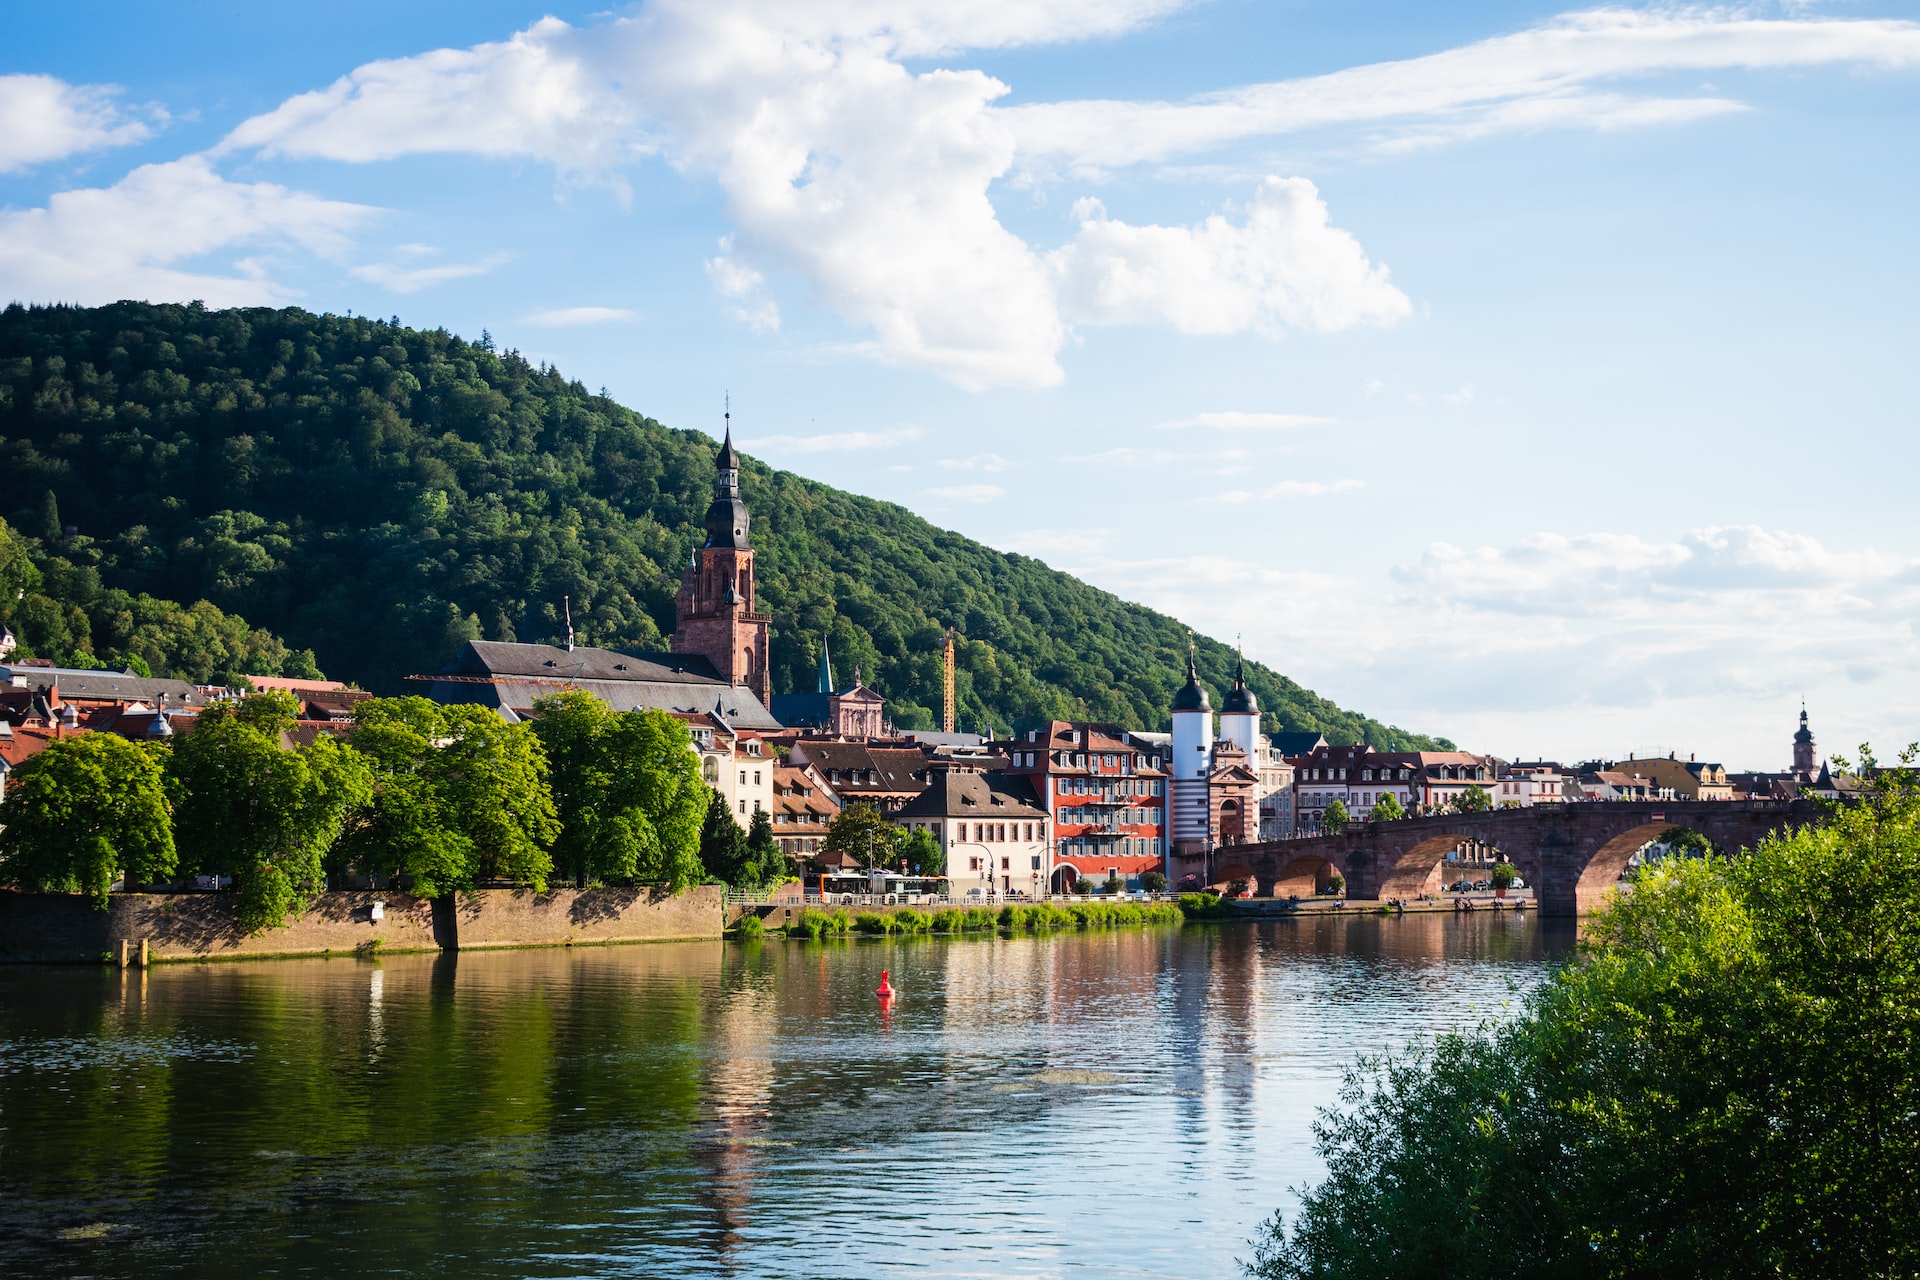 The serene, majestic looking Heidelberg on the Neckar River.